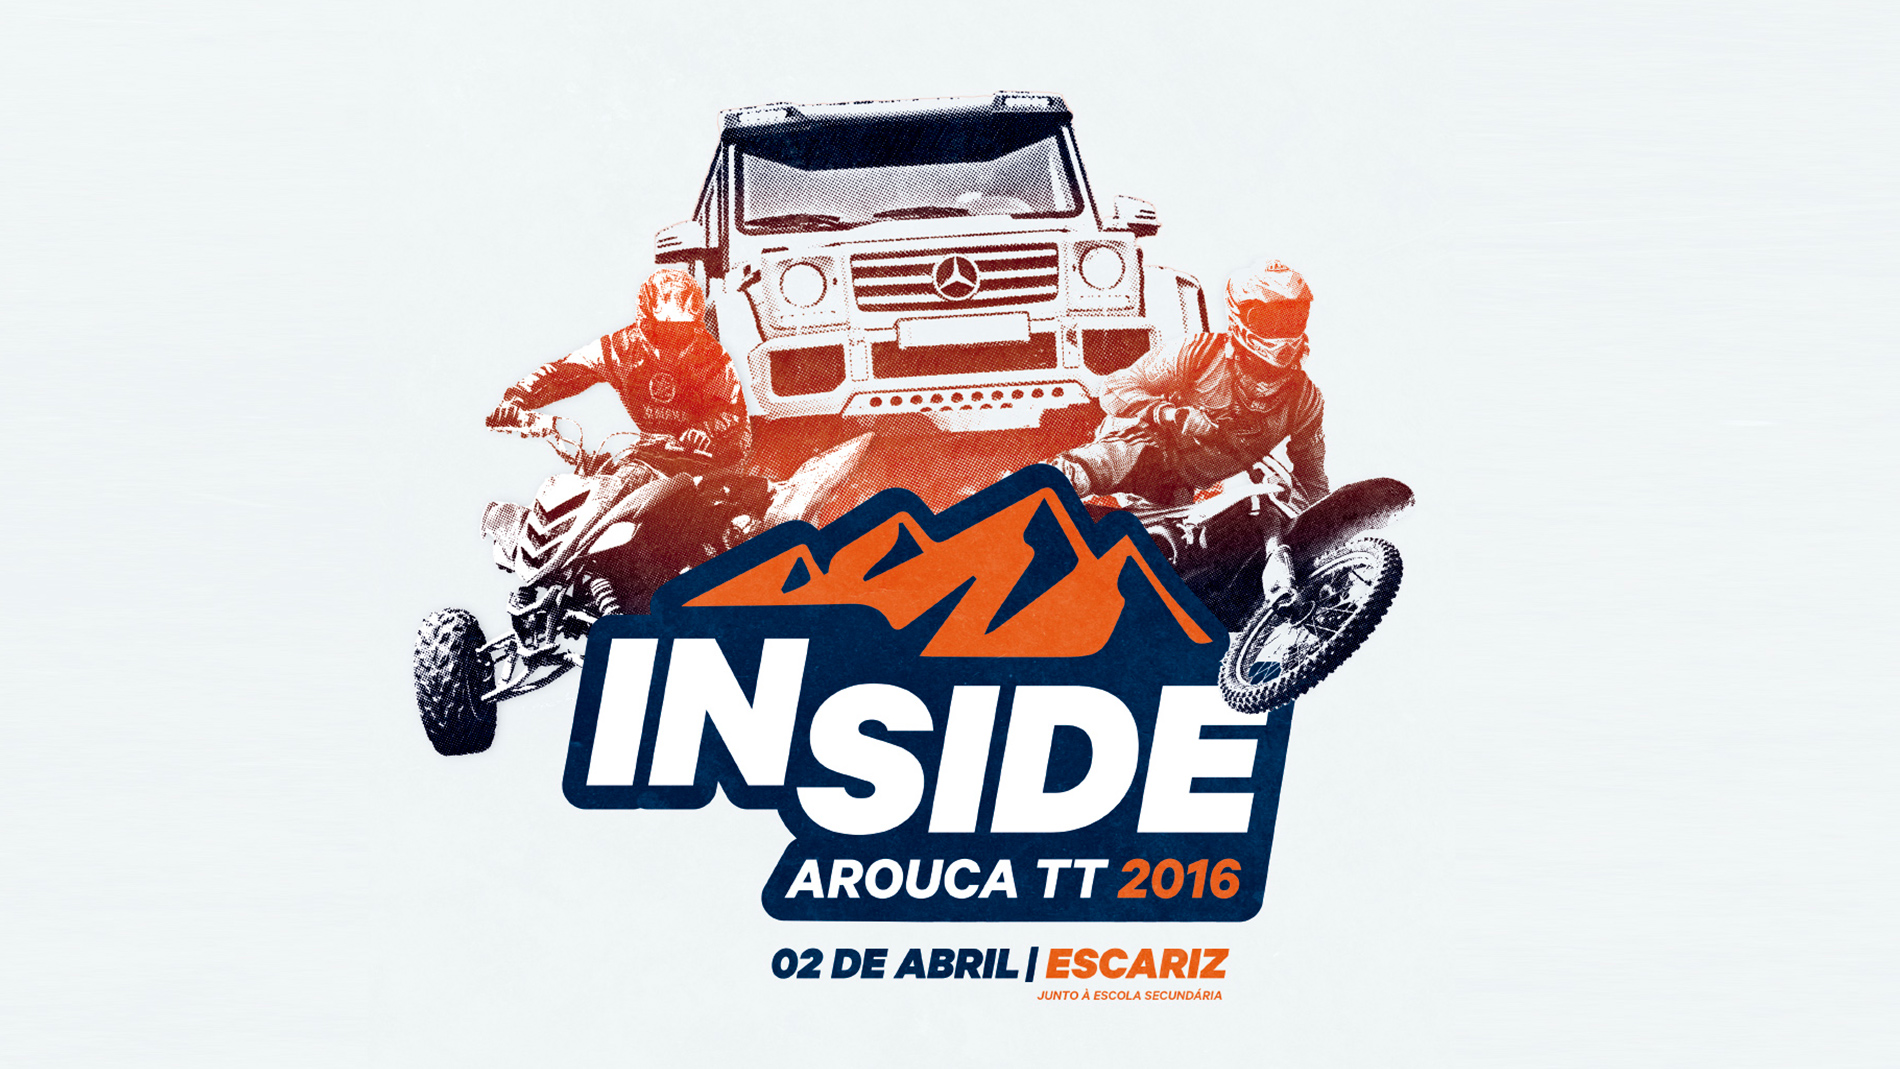 Inside Arouca TT 2016